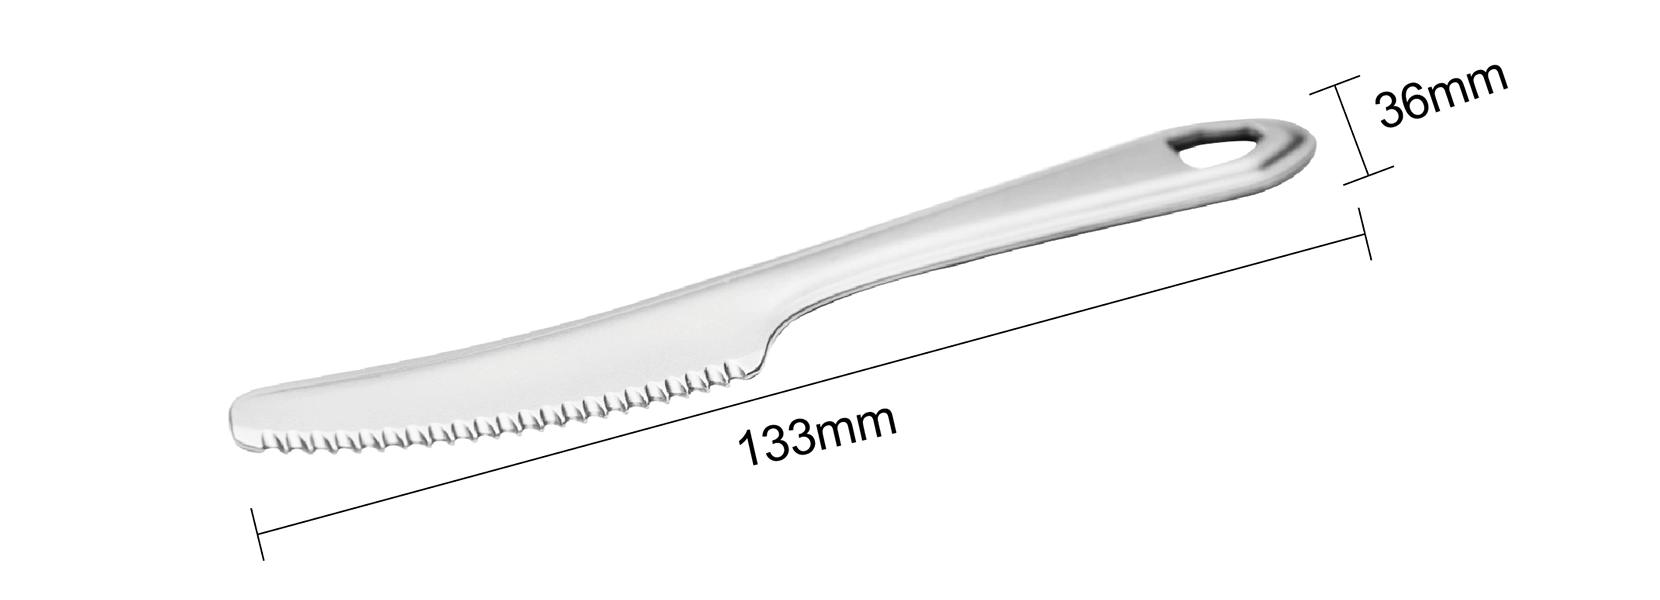 details of Ultralight Titanium Knife Utensil for lightweight Camping